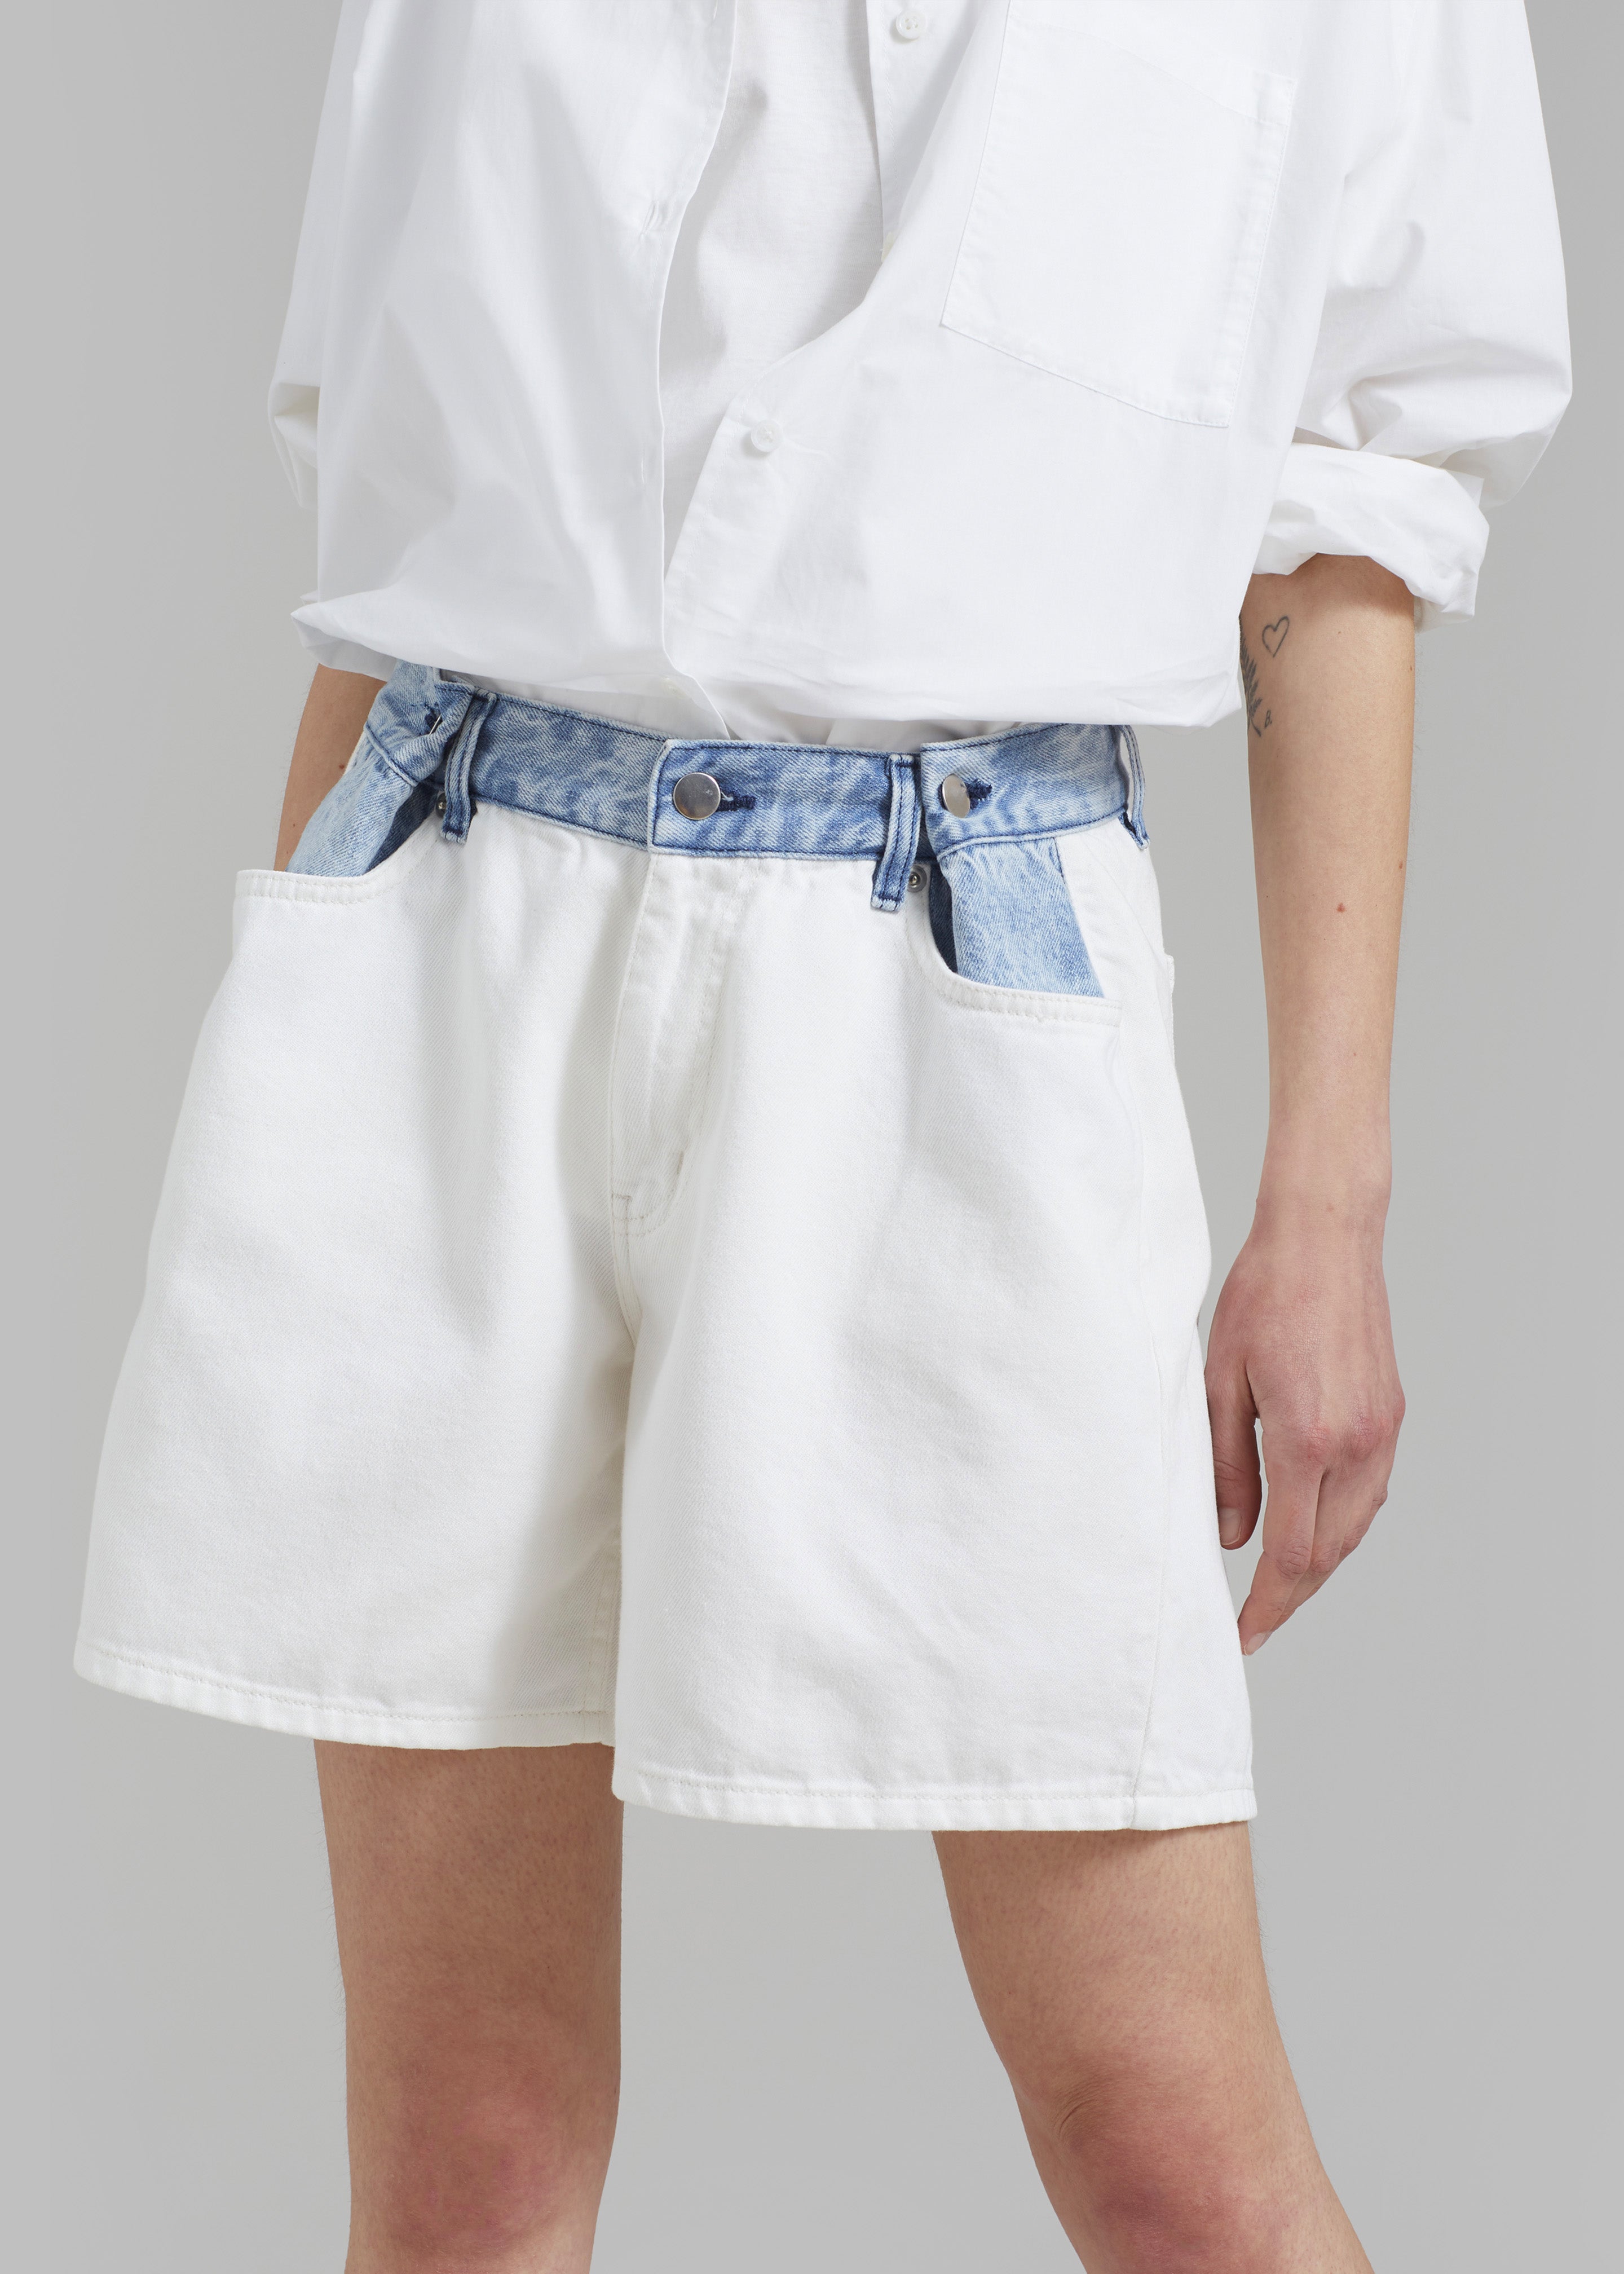 Hayla Contrast Denim Shorts - Off White/Blue - 7